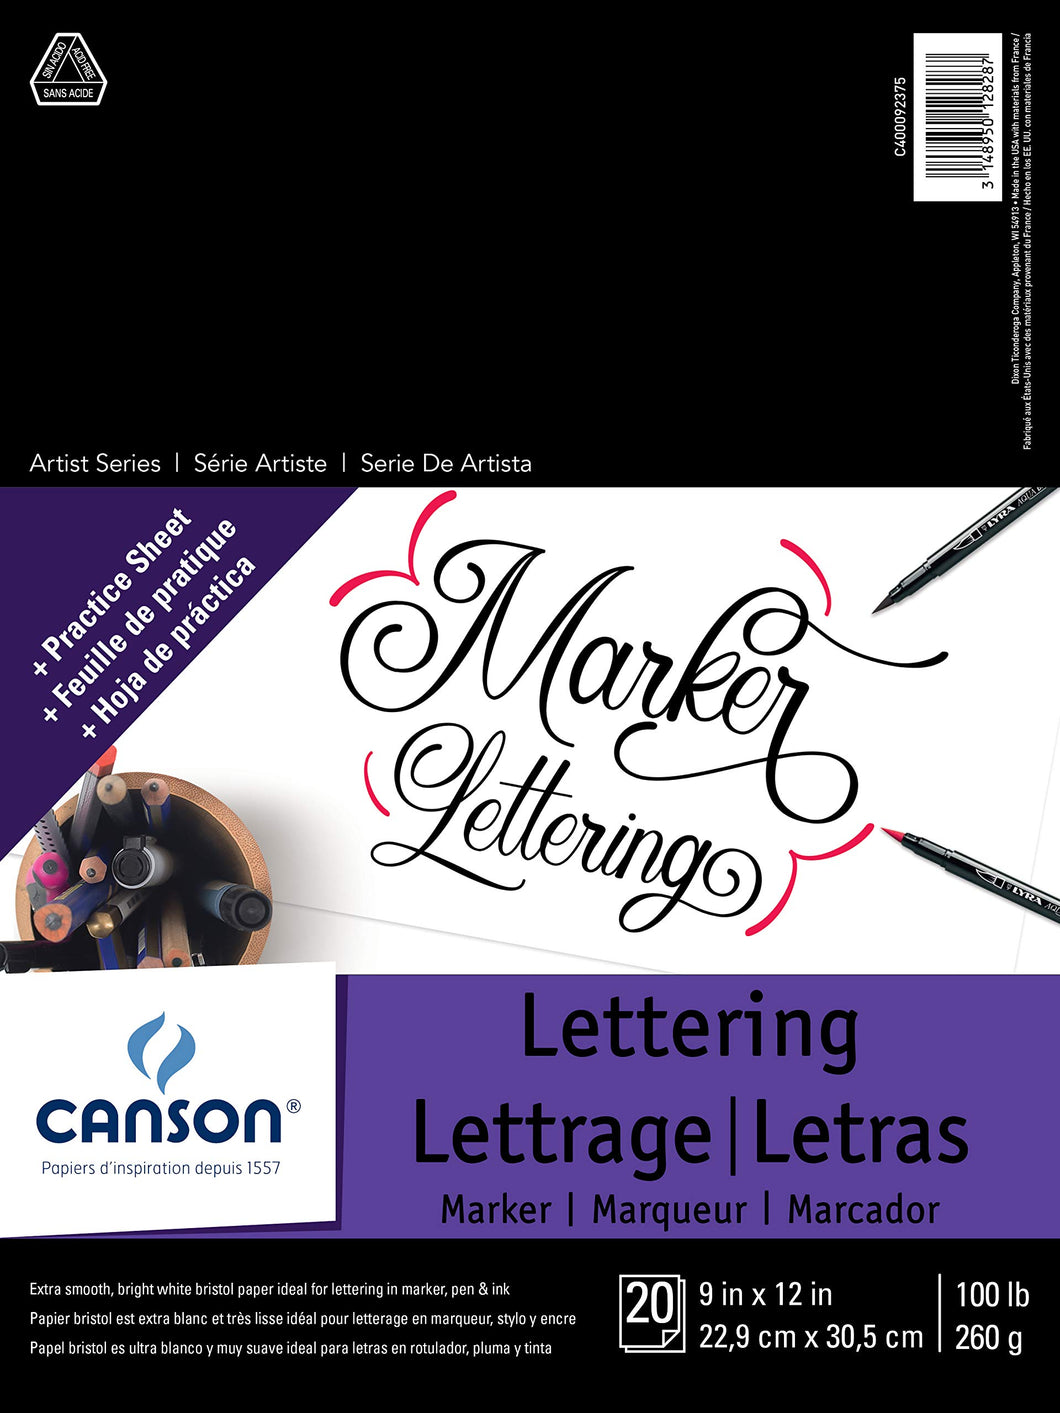 CANSON - Artist Series Lettering Pads (Libretas para Lettering) - 100lb - 20 hojas